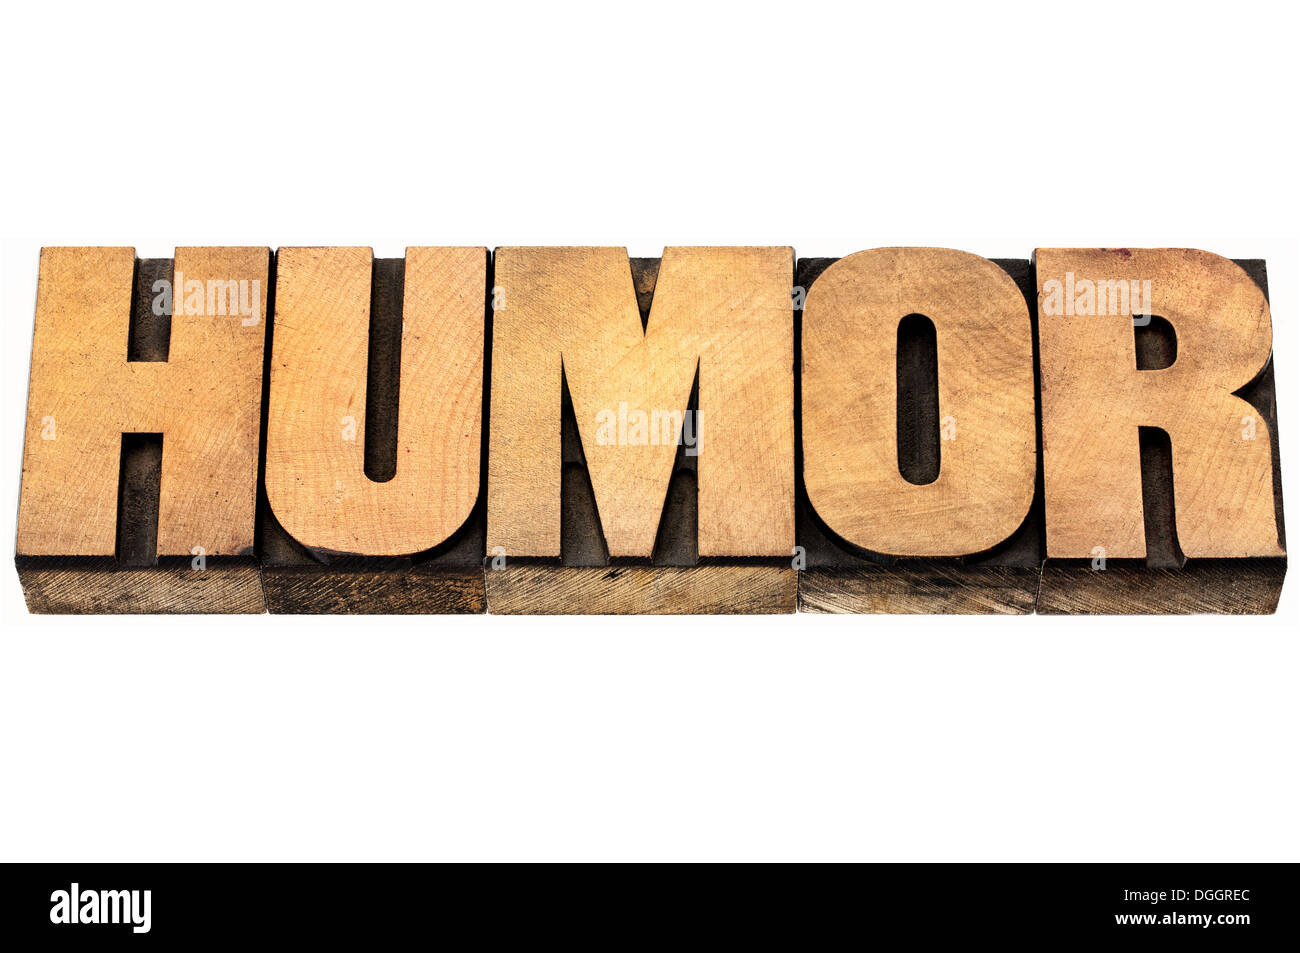 Umorismo word - testo isolato in rilievografia vintage tipo legno Foto Stock